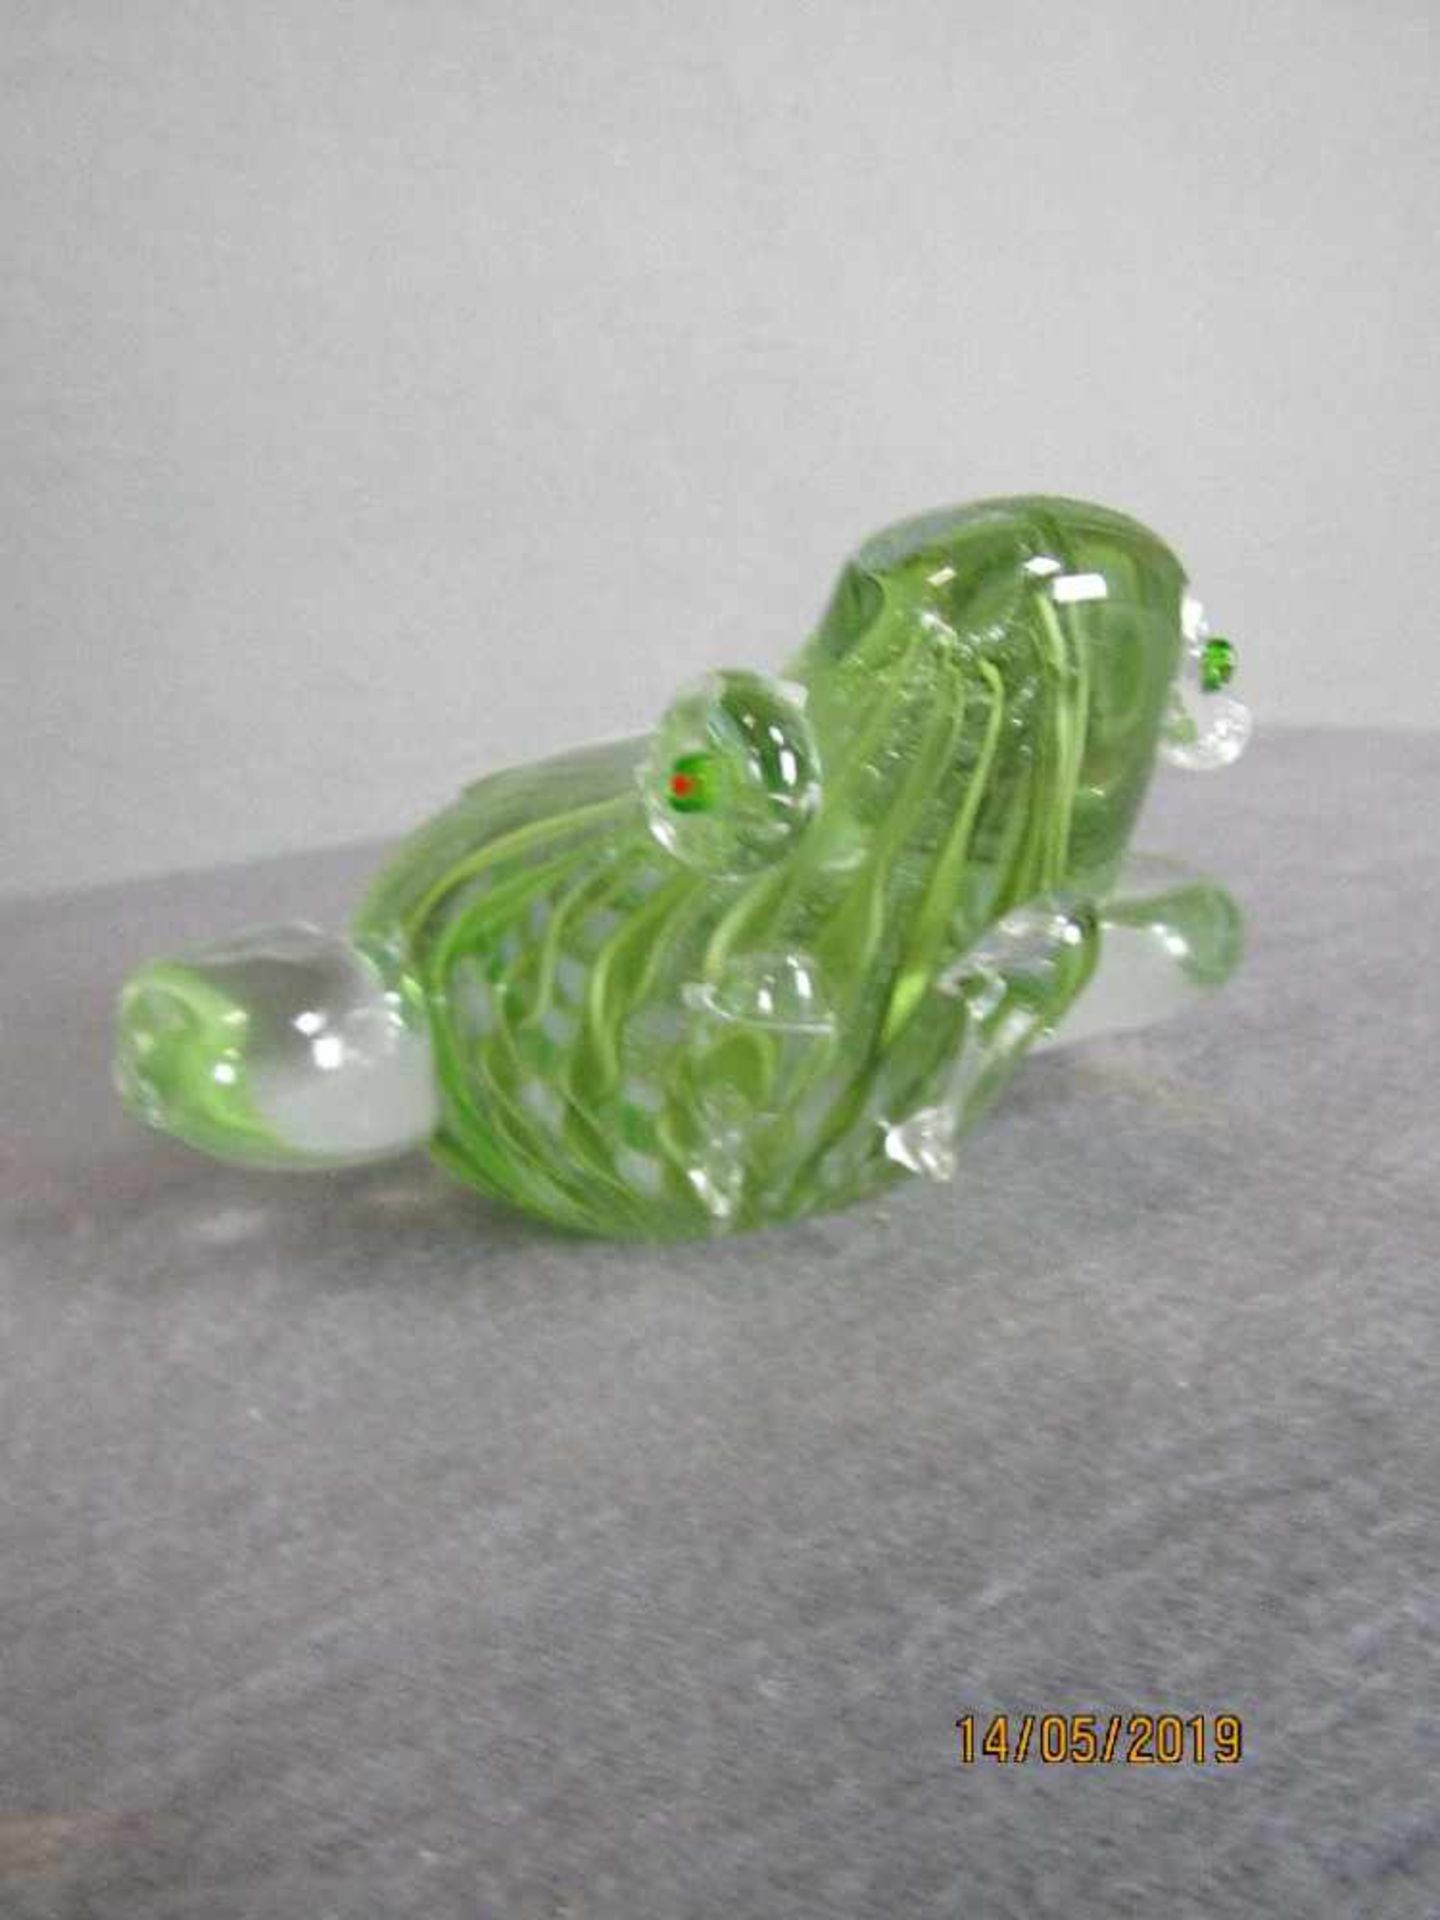 Glasskulptur Frosch klargrün 13cm lang - Image 2 of 2